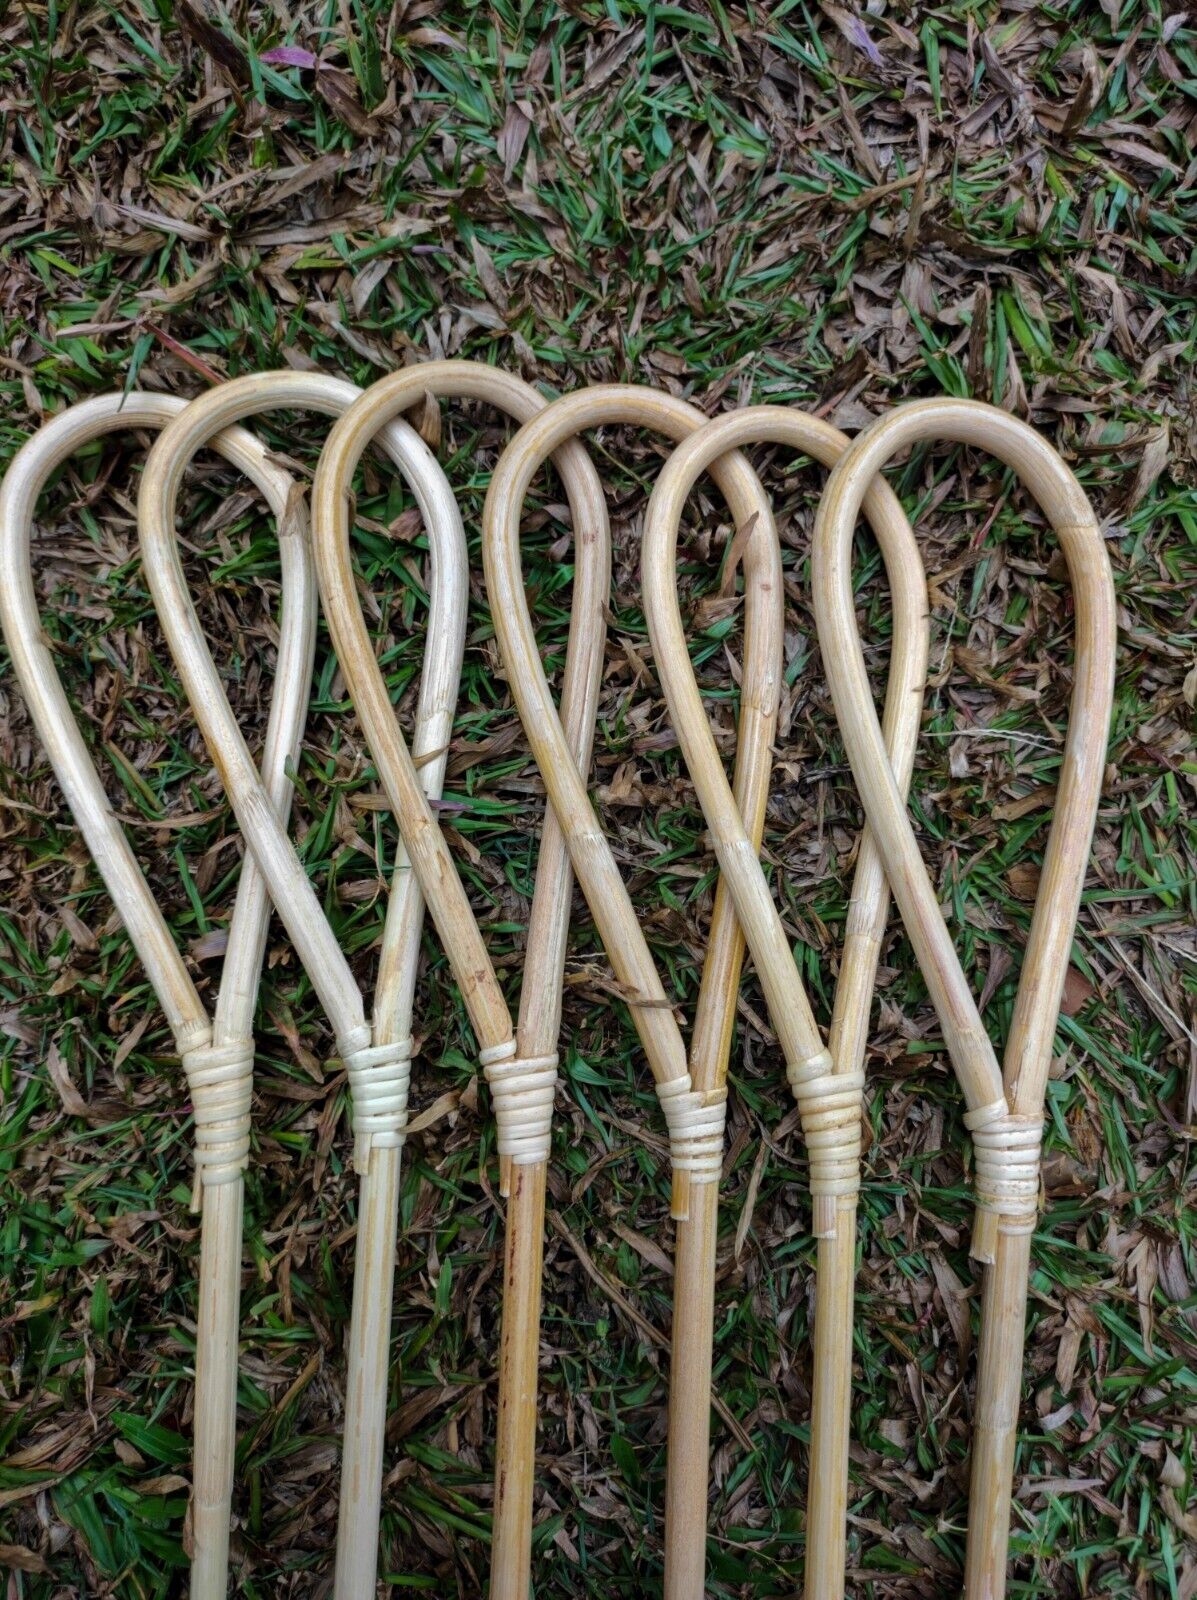 2pc Rattan cane Scholastic Punishment sticks high quality [30-35 inches length]